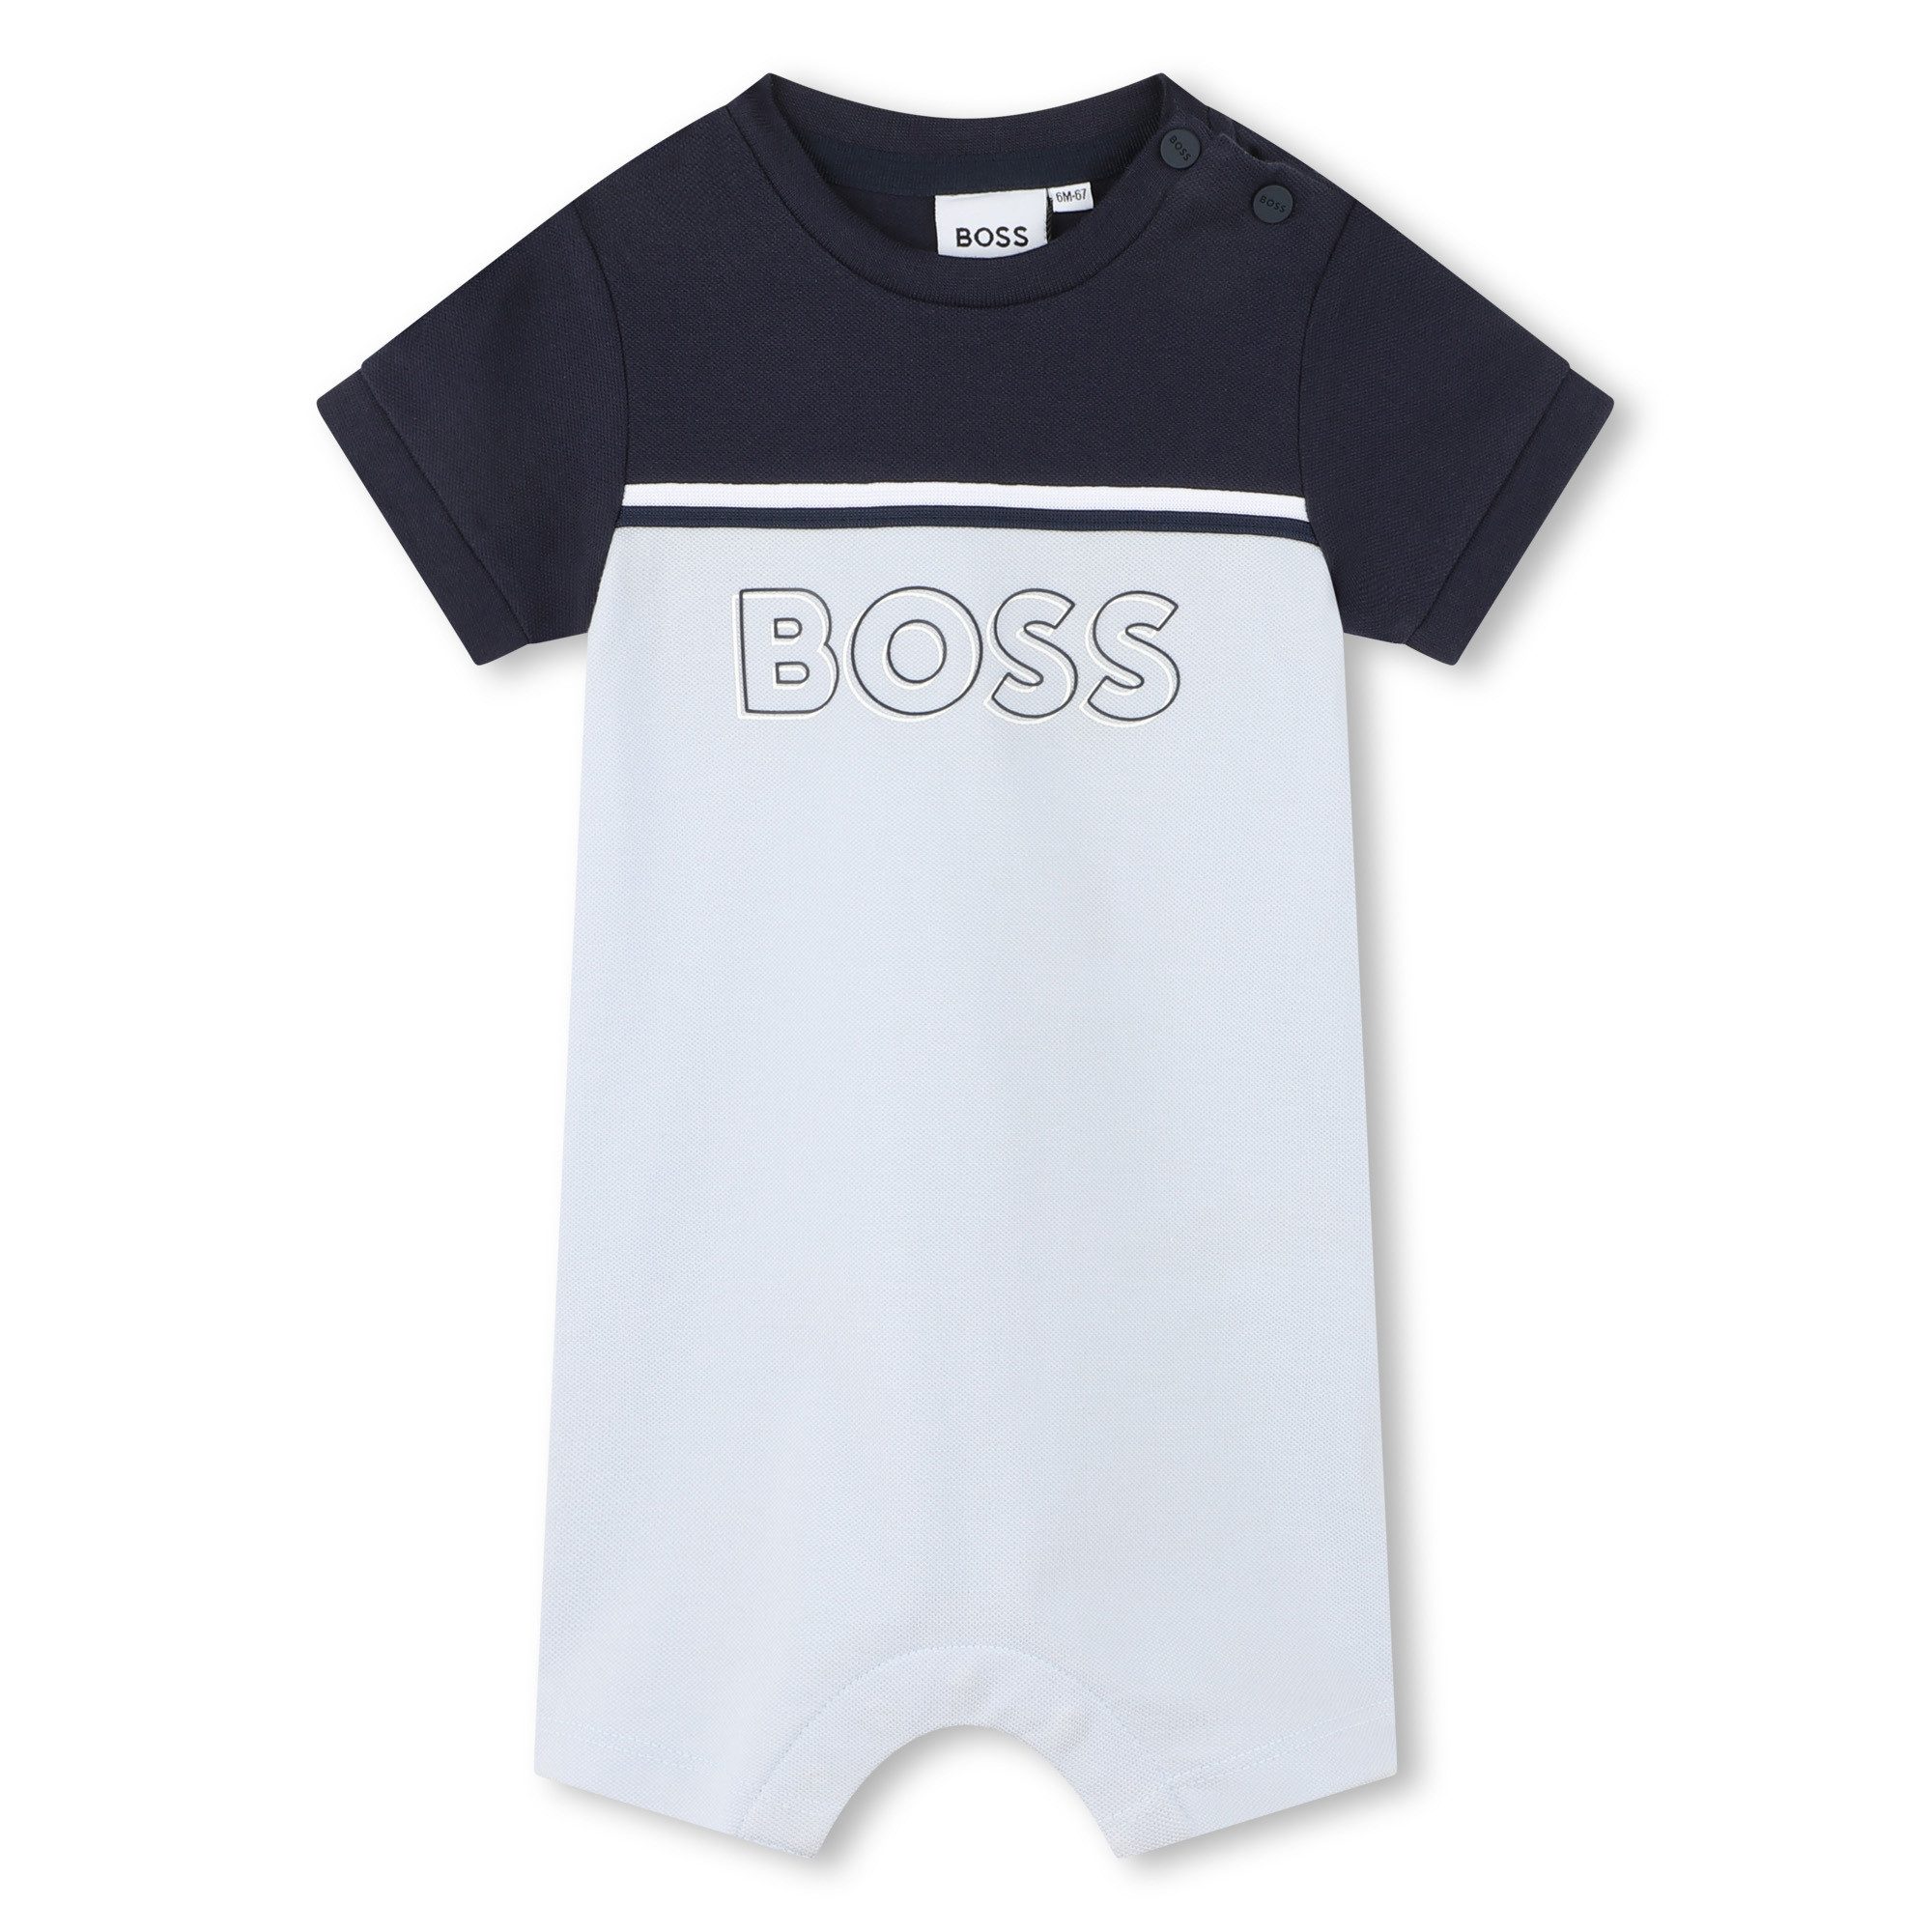 BOSS Strampler BOSS Baby Playsuit himmelblau mit Logo, kurz, 3-12 Monate